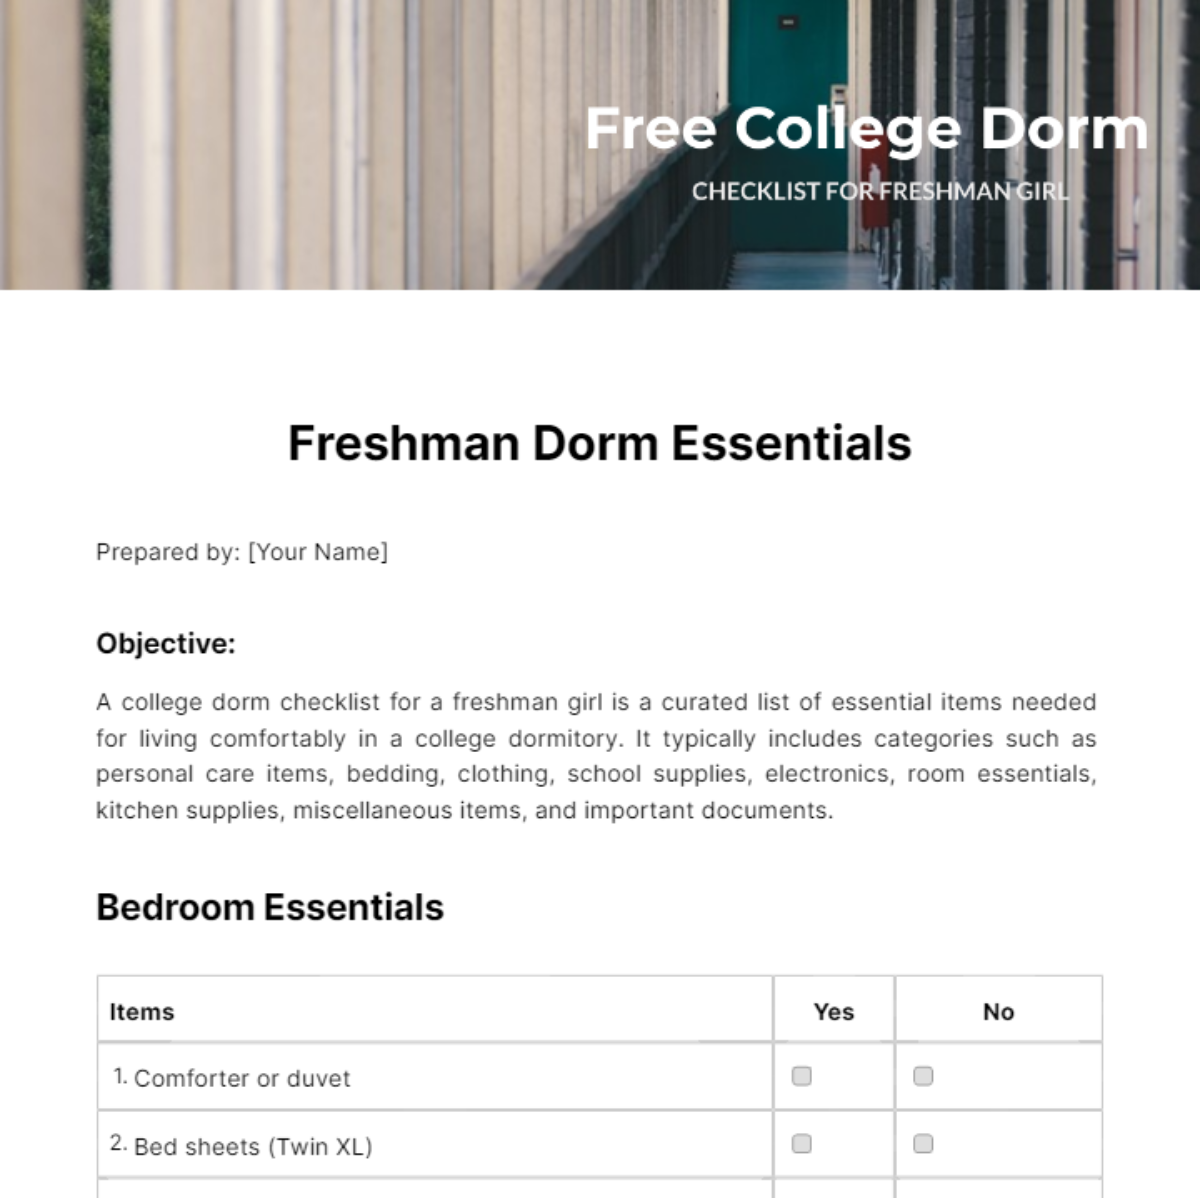 Free College Dorm Checklist For Freshman Girl Template